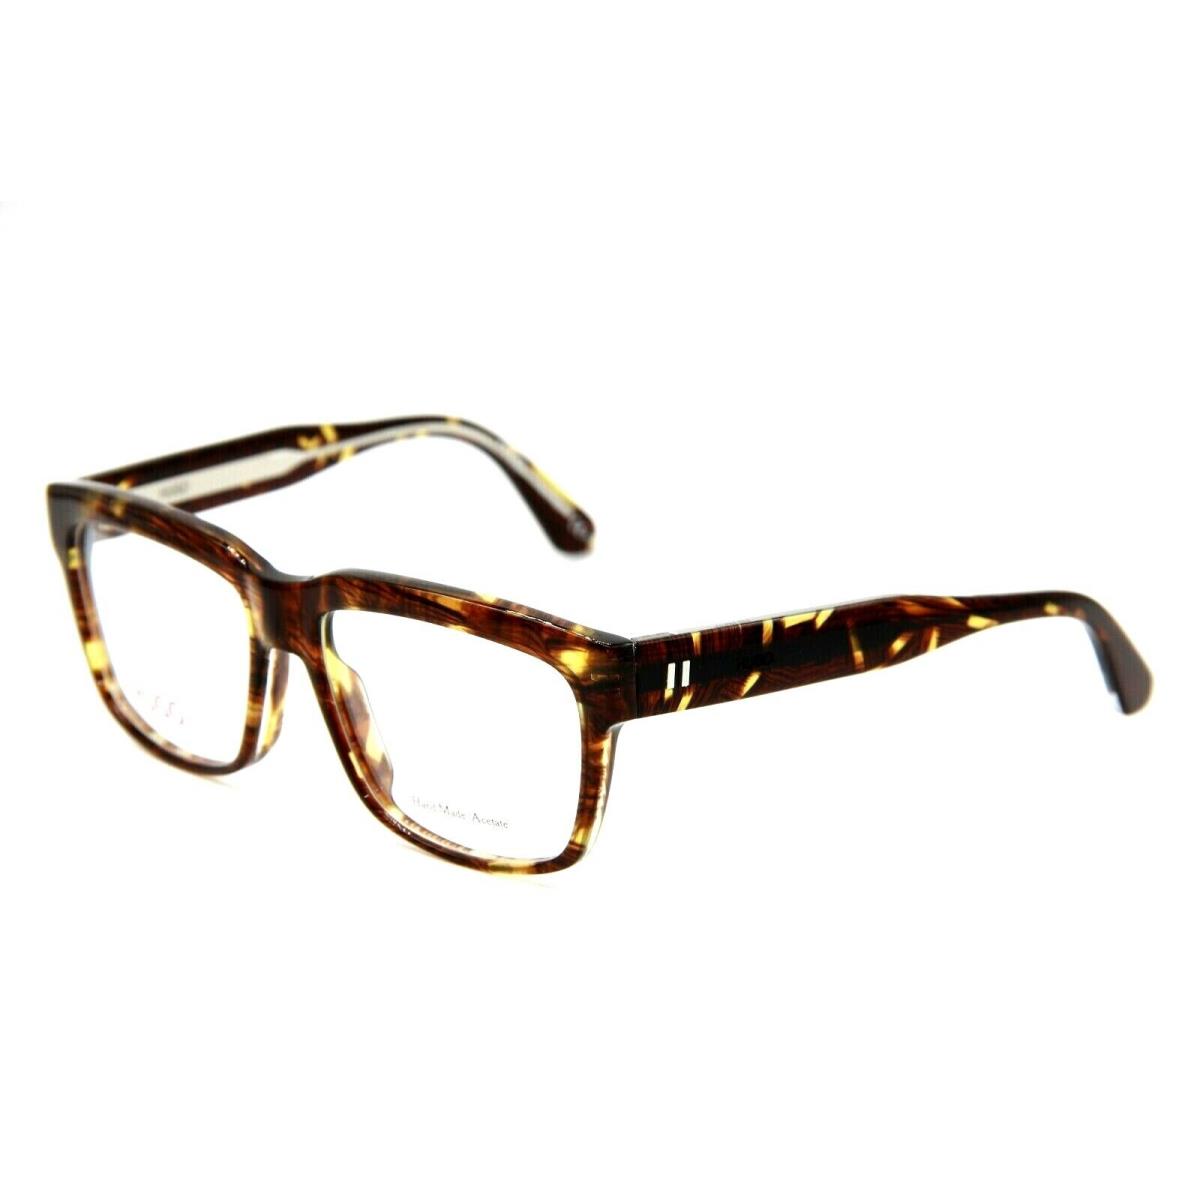 Hugo Boss 0129 Jiq Brown Eyeglasses Frames RX 55-16 - Frame: BROWN